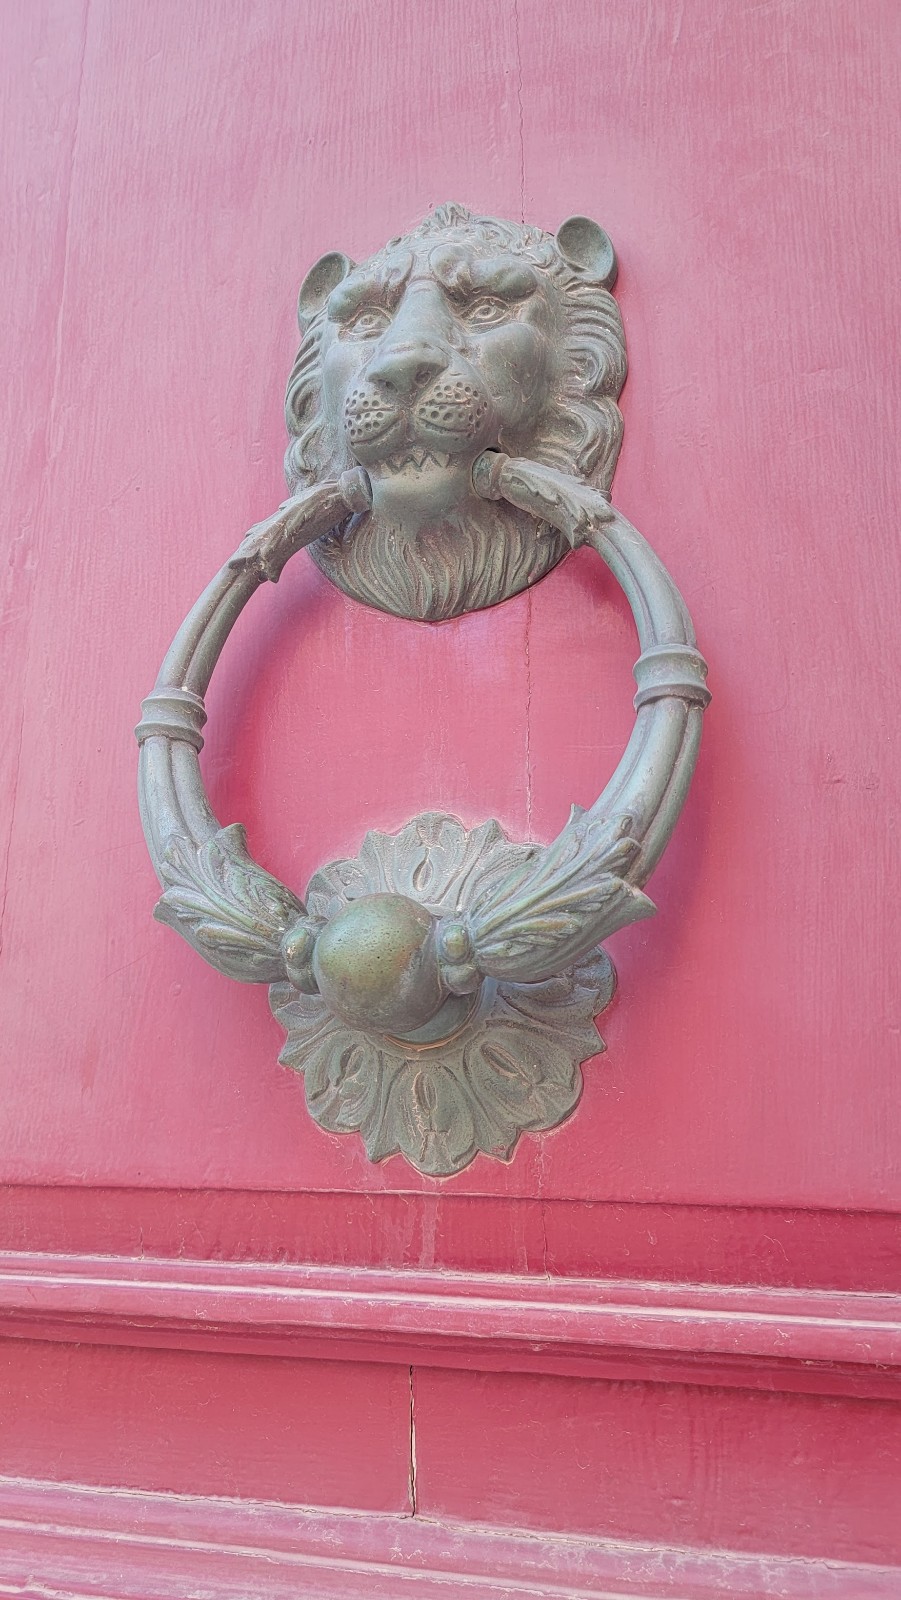 a door knocker on a pink wall